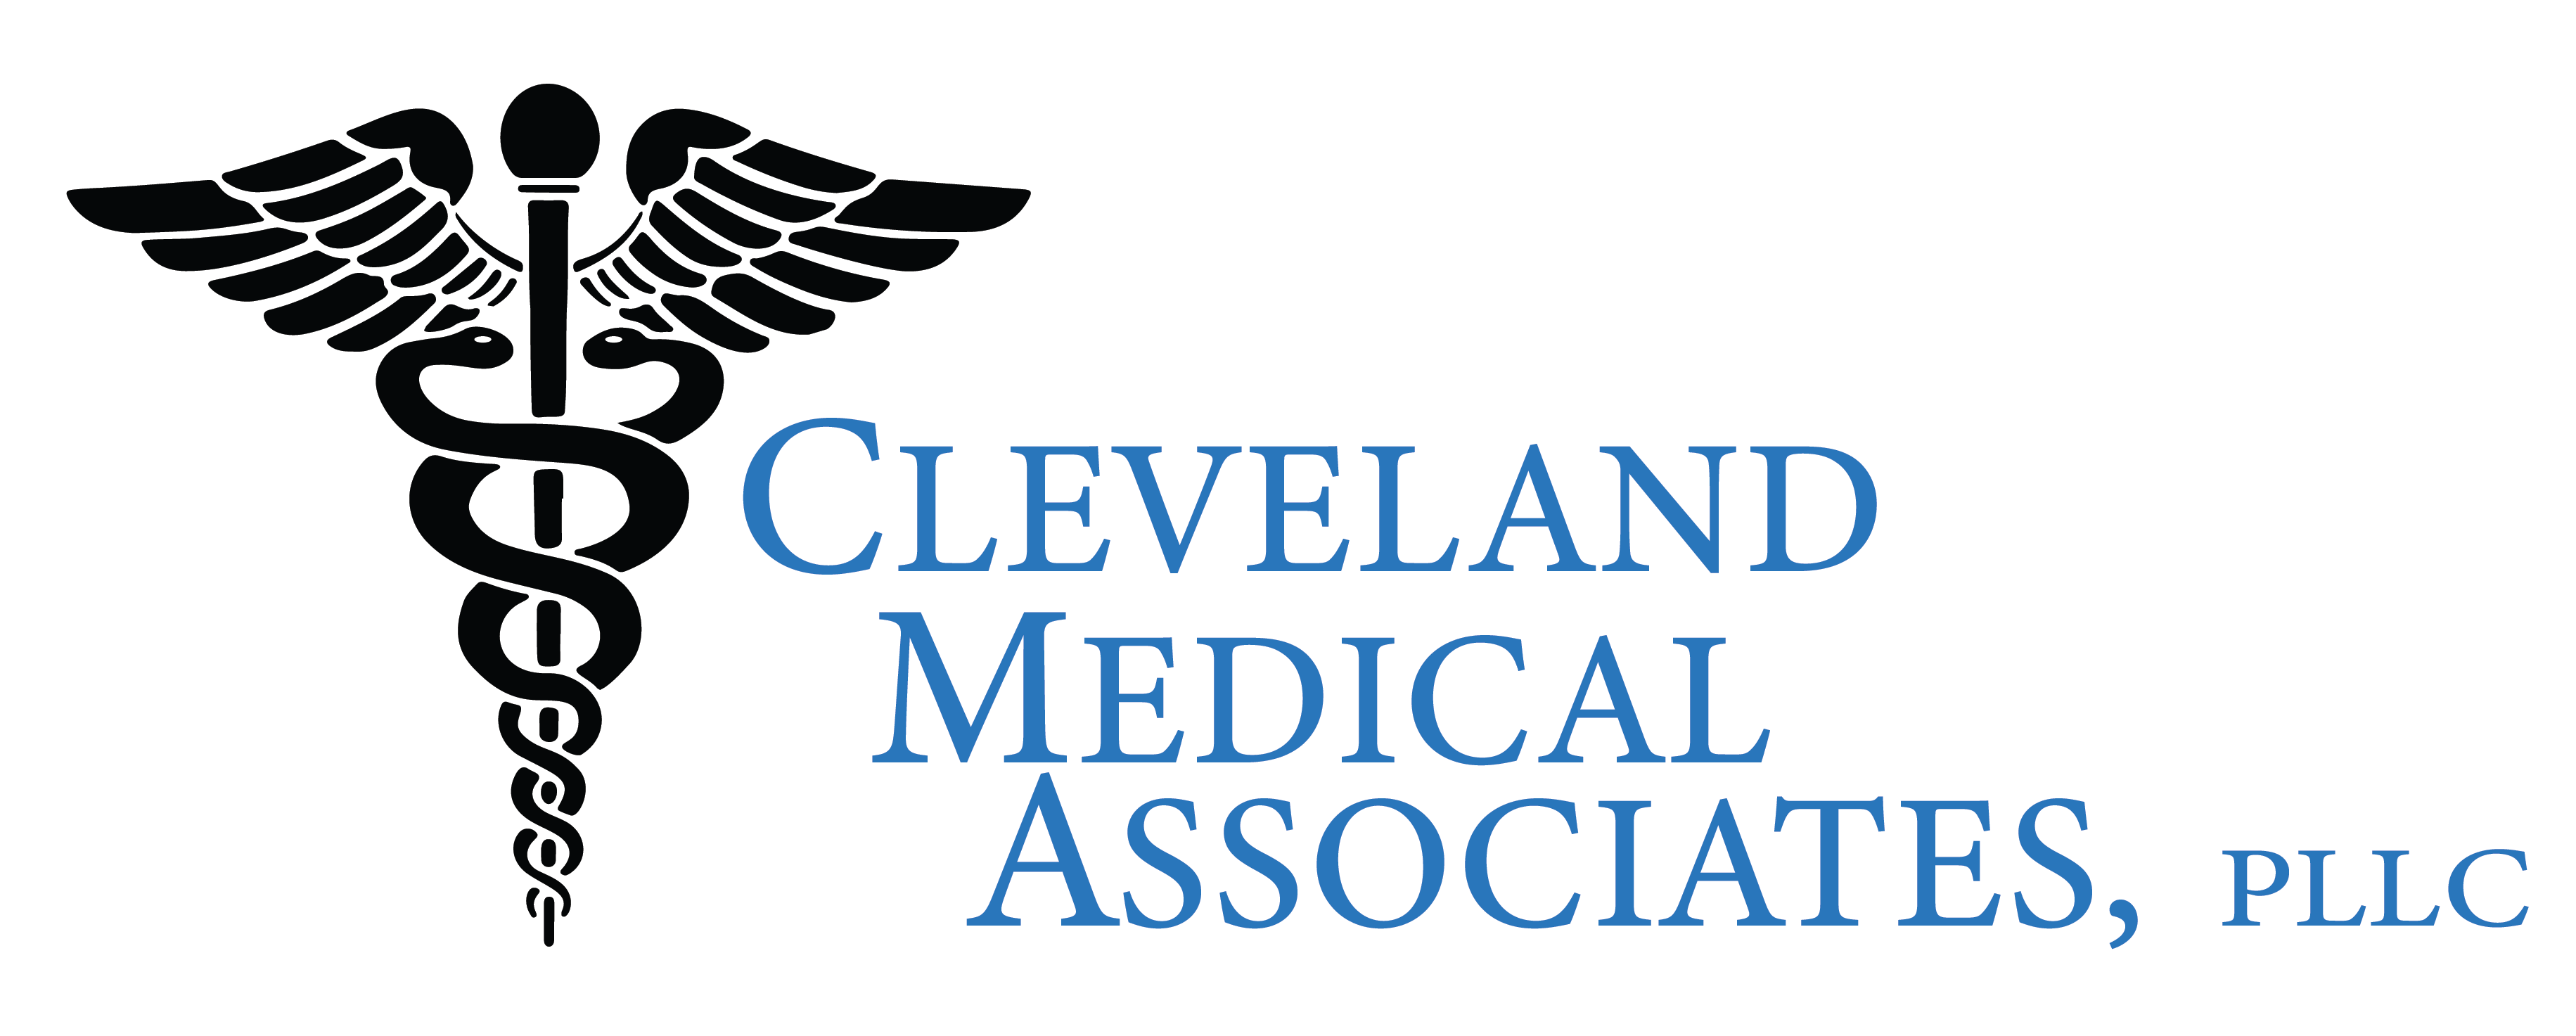 Cleveland Medical Associates